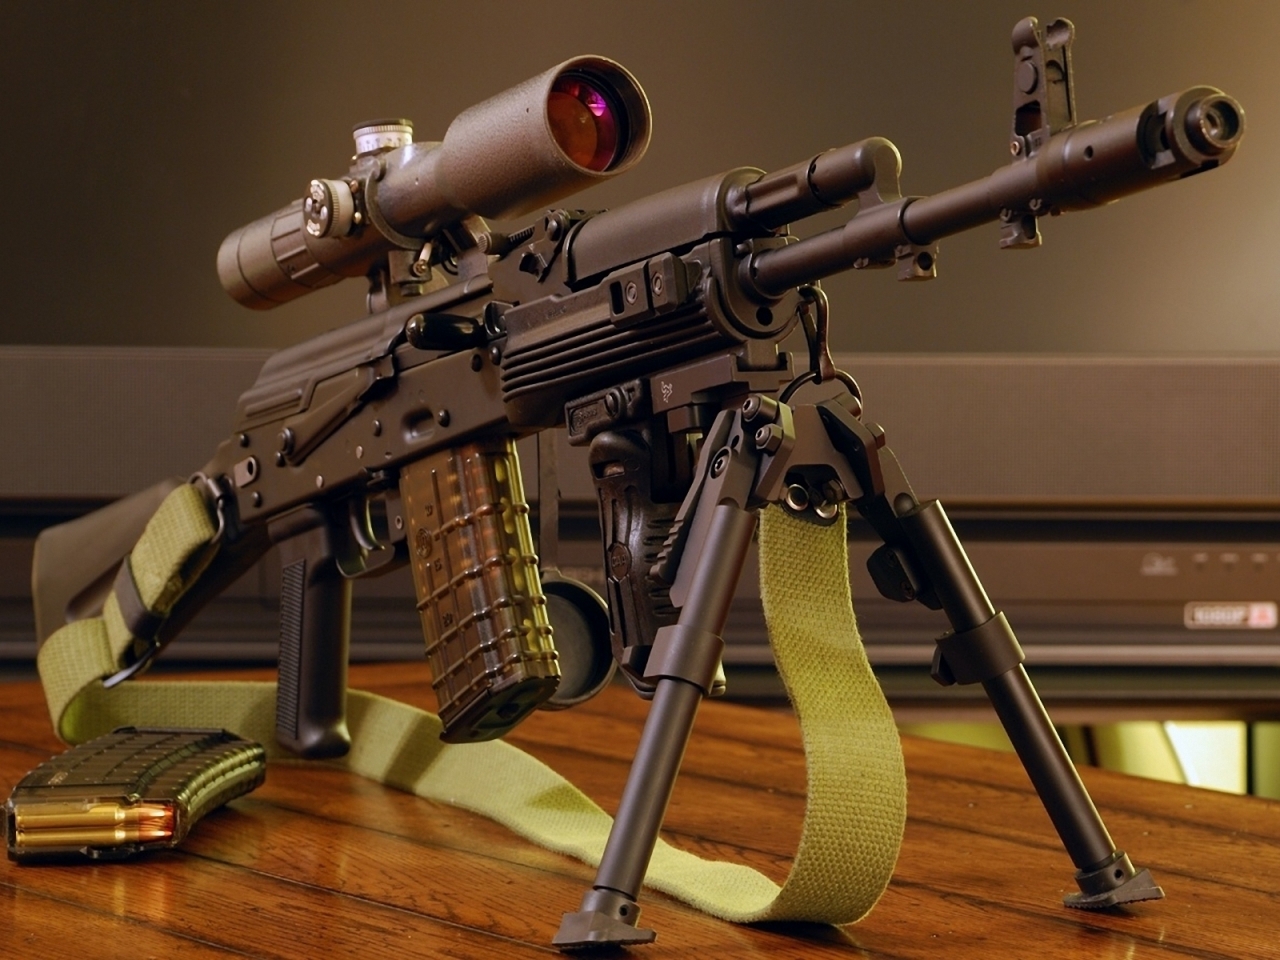 Automatic Gun AK-101 for 1280 x 960 resolution